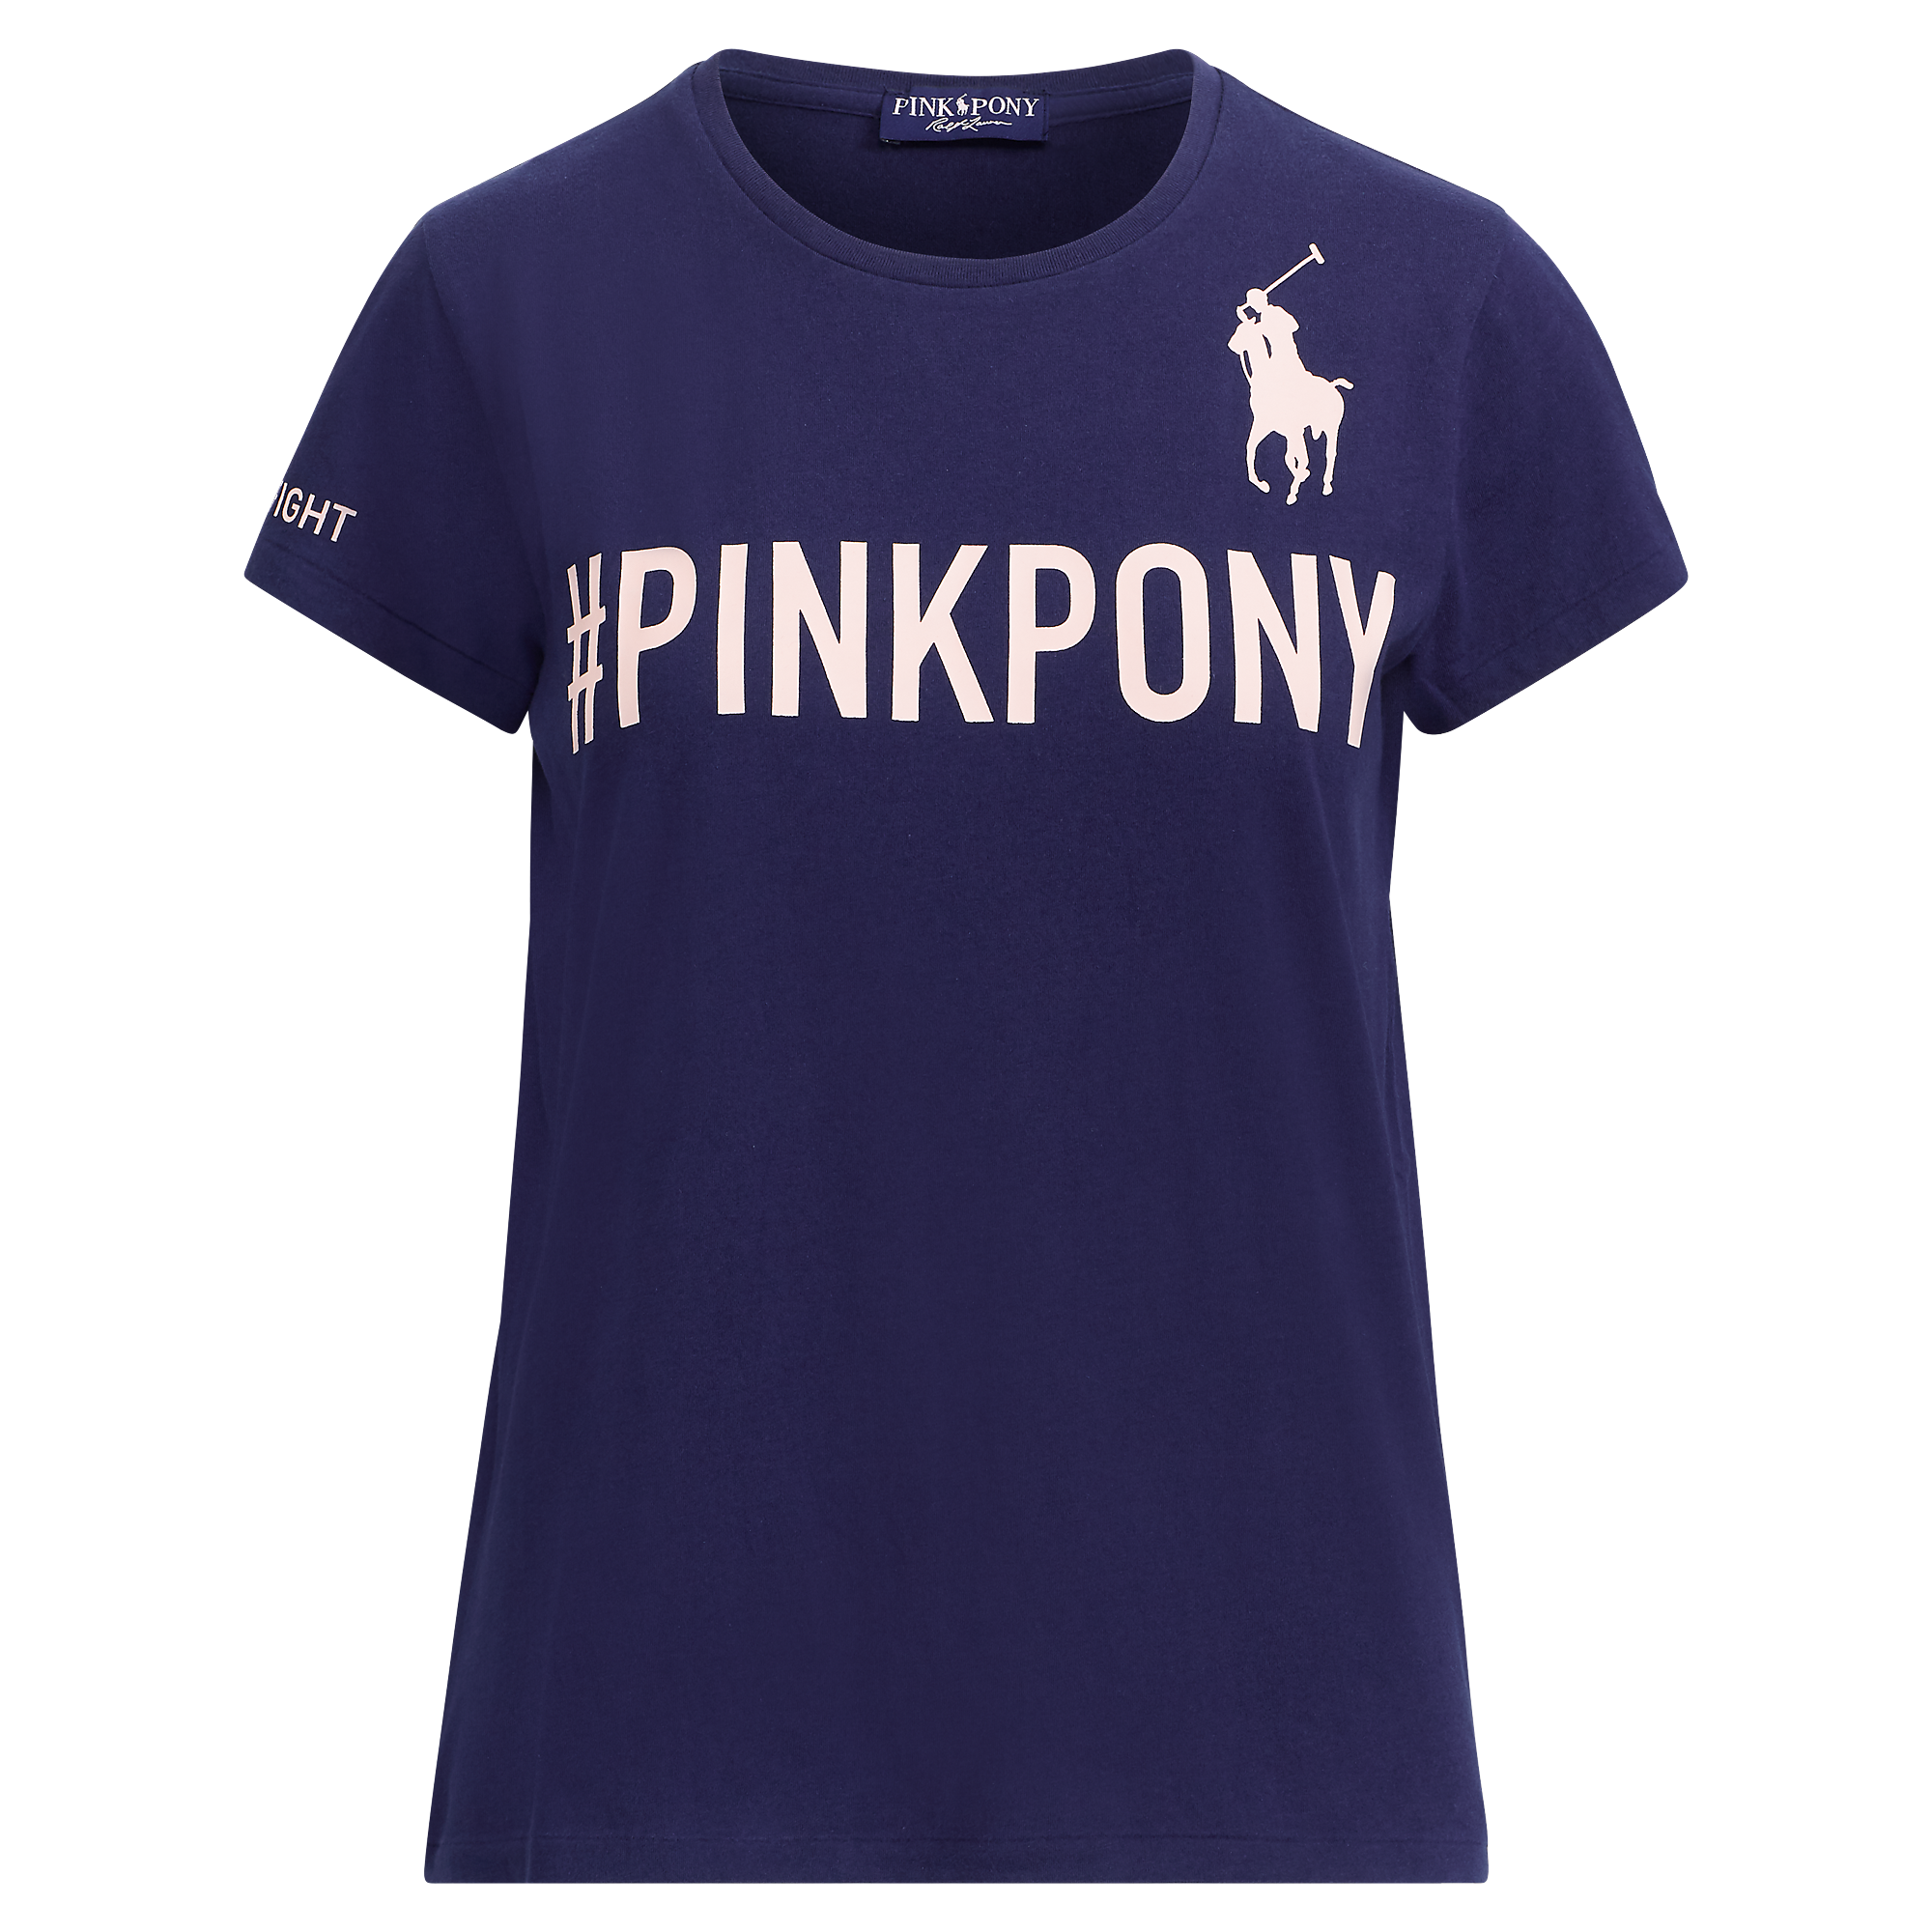 Ralph Lauren Pink Pony Graphic T-Shirt. 2